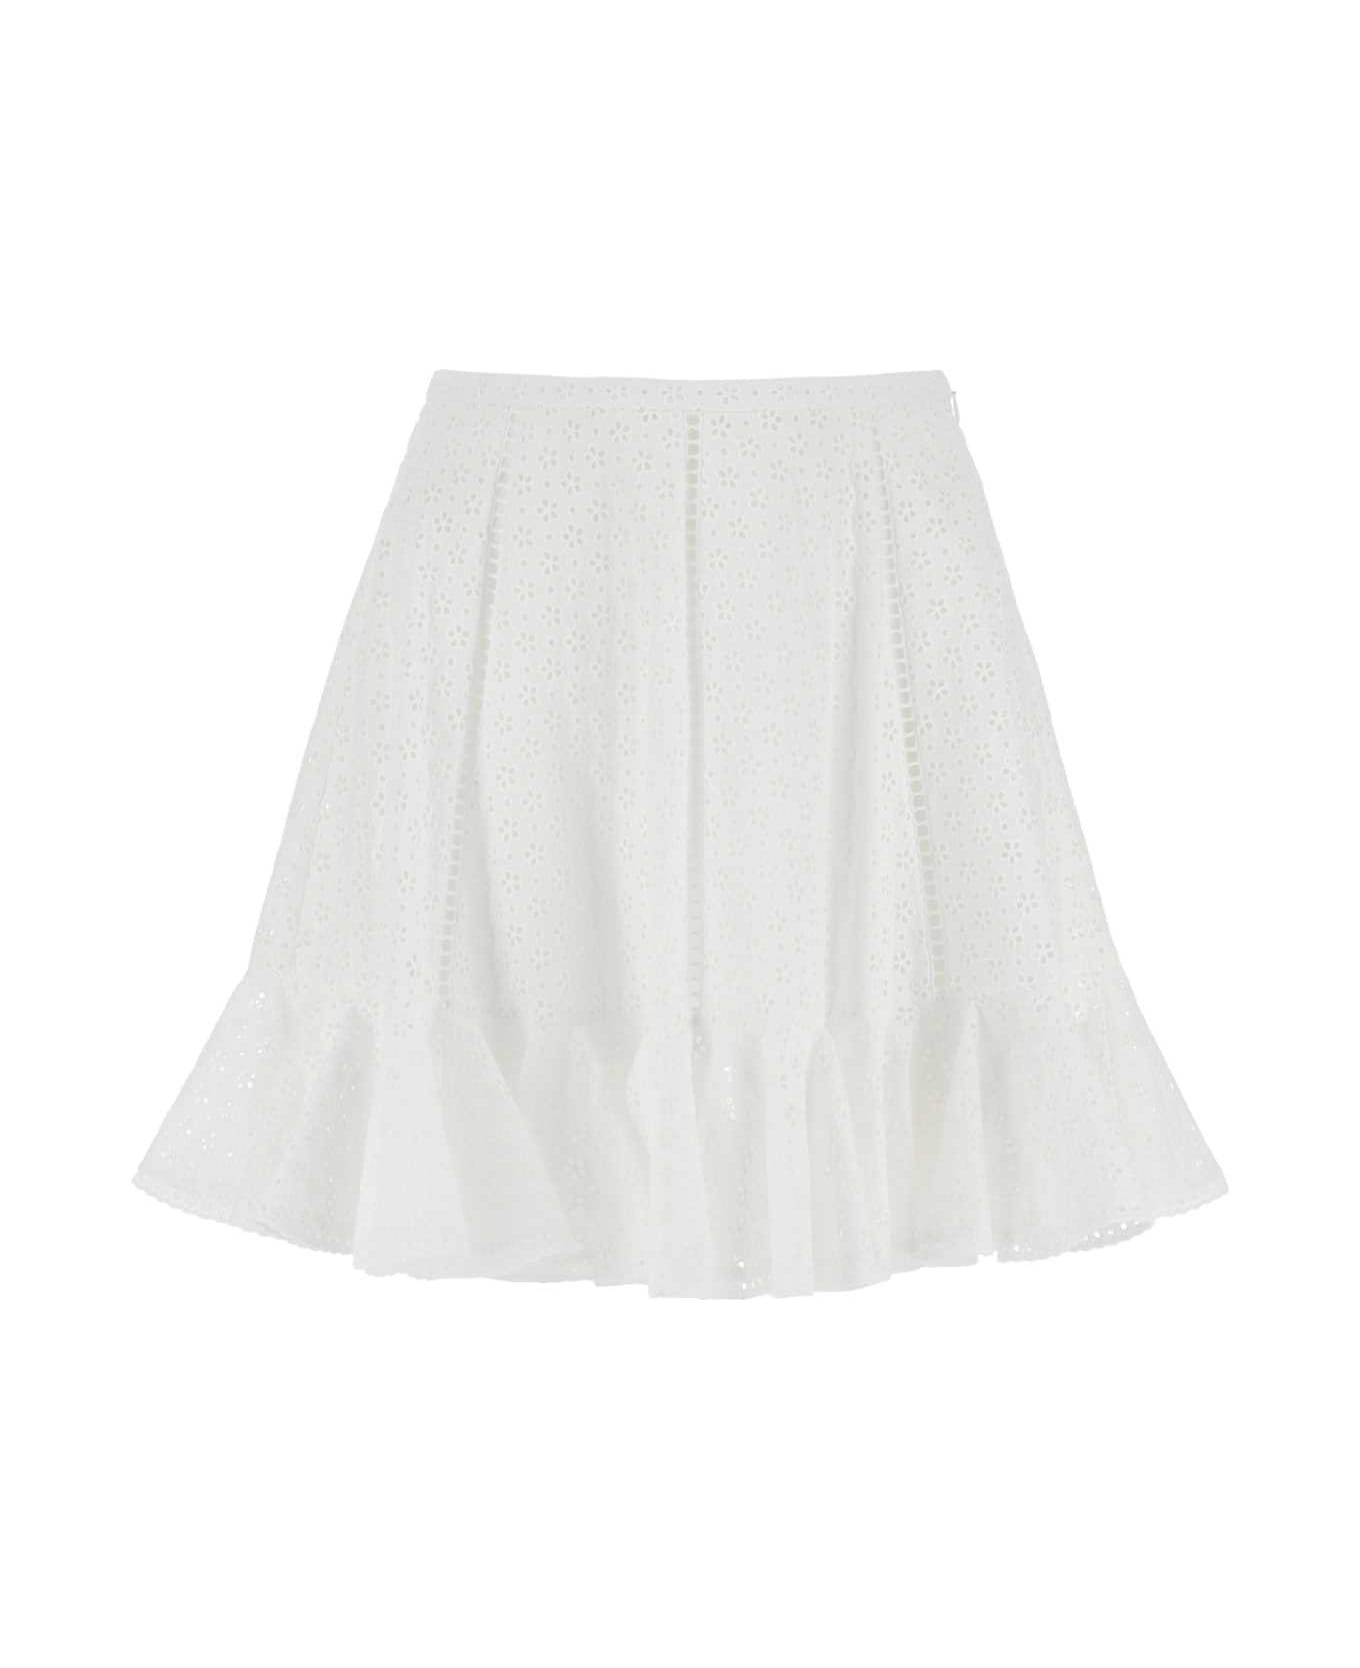 Philosophy di Lorenzo Serafini White Broderie Anglaise Skirt - White